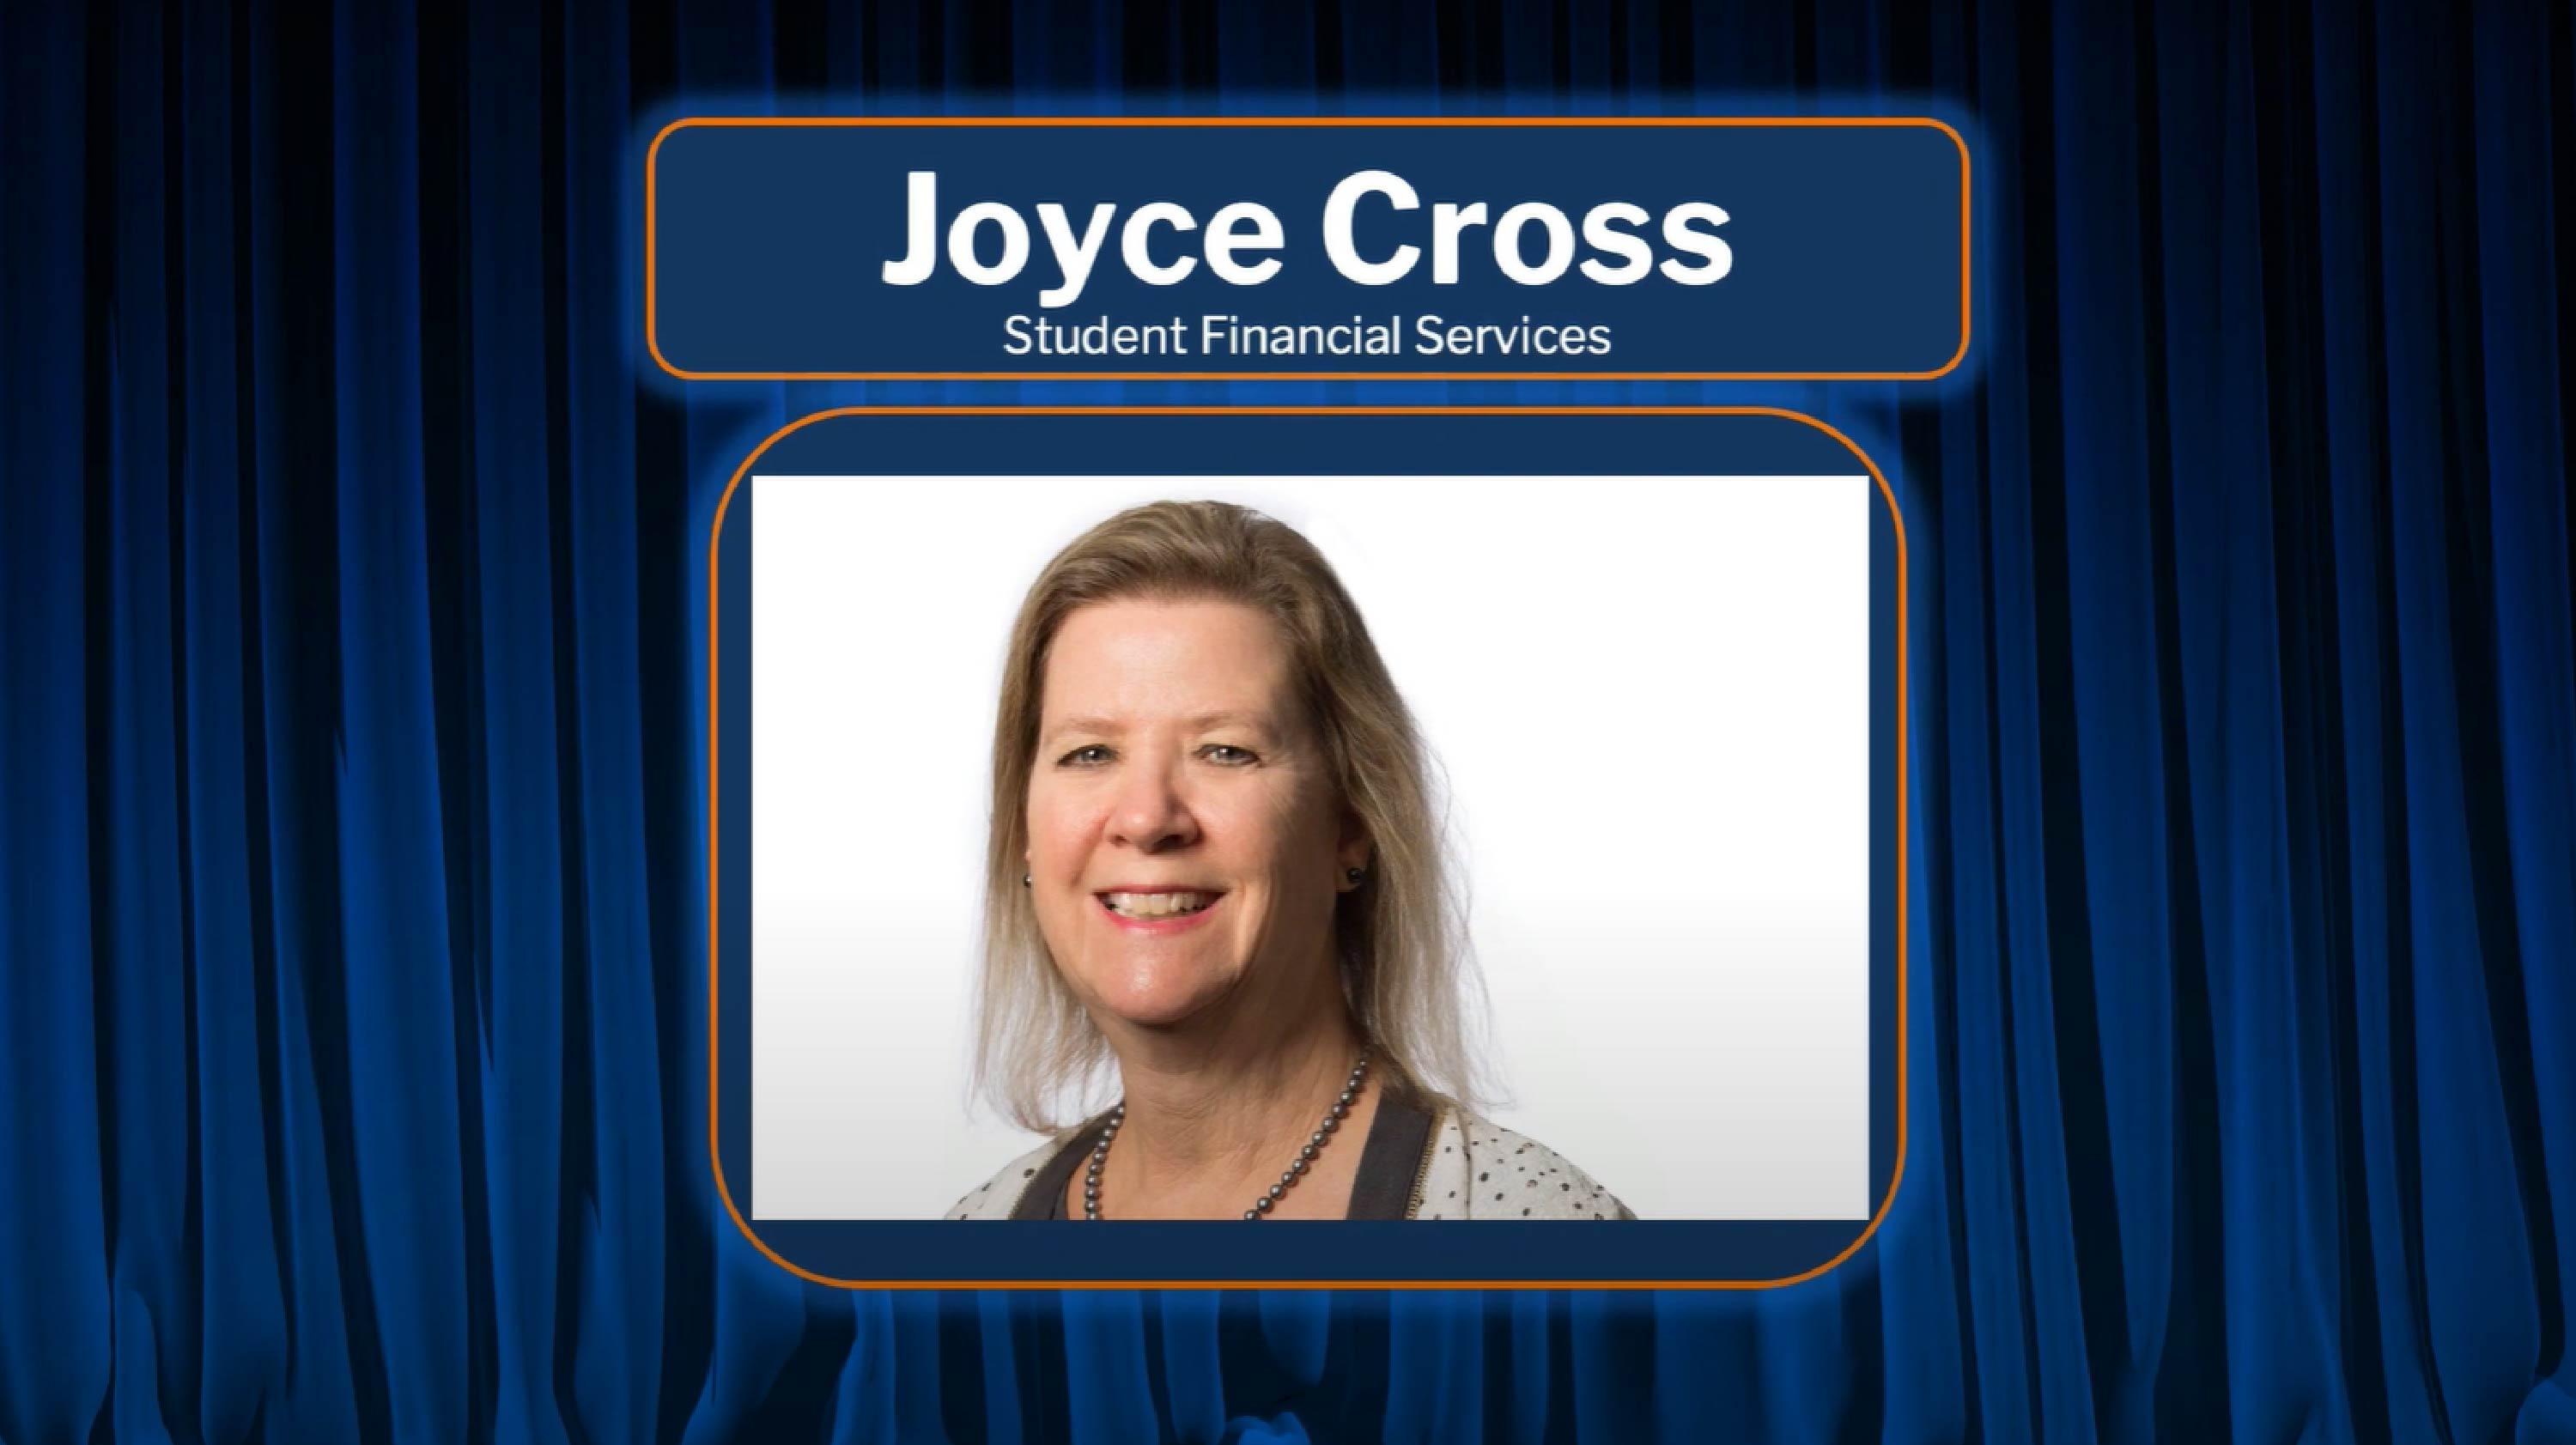 Congratulations Joyce Cross